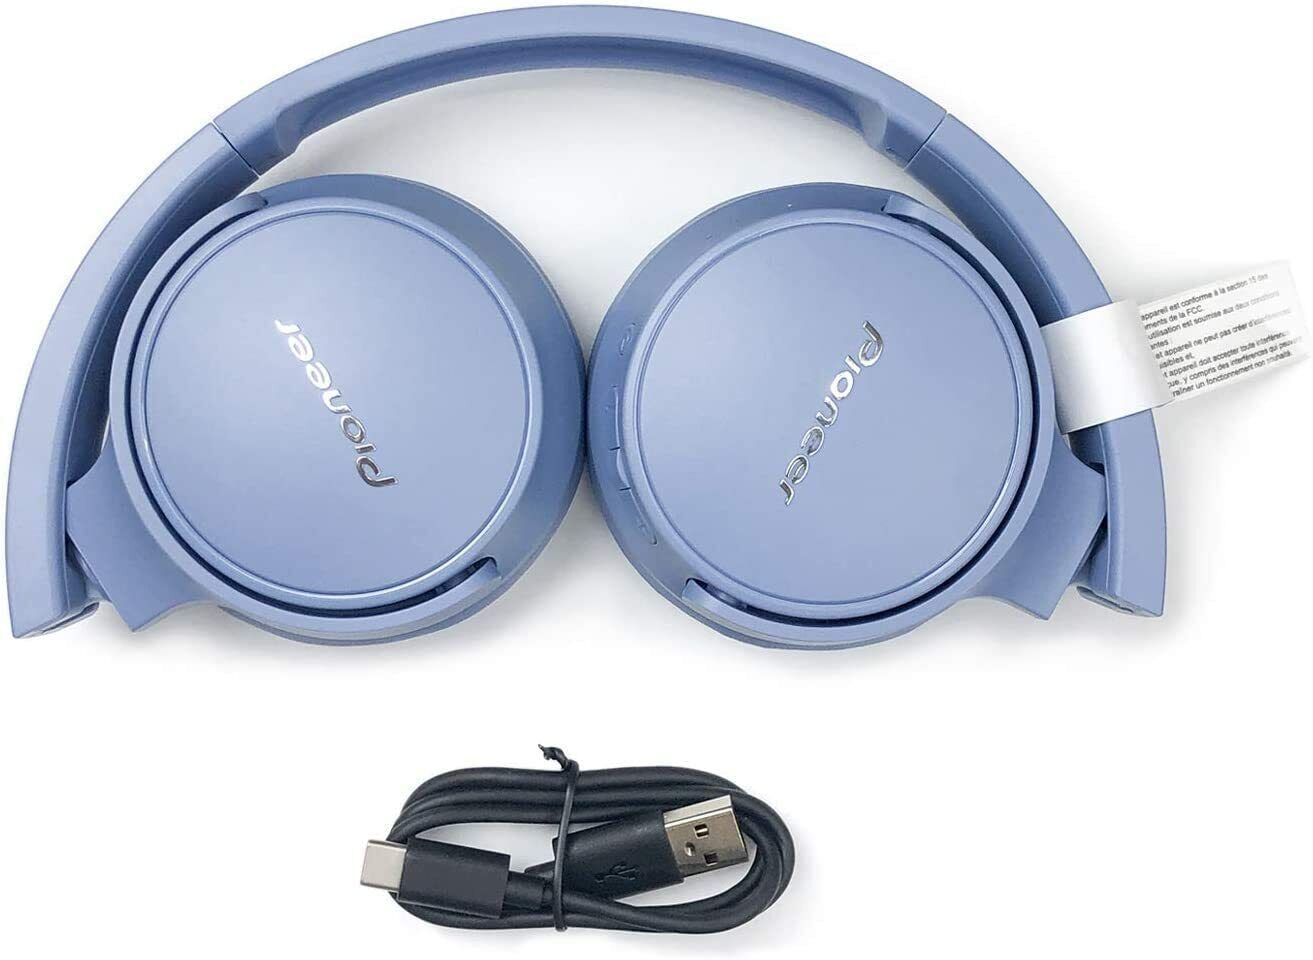 SE-S3BTL Pioneer S3wireless Headphone Blue Bluetooth Sealed Type Japan New